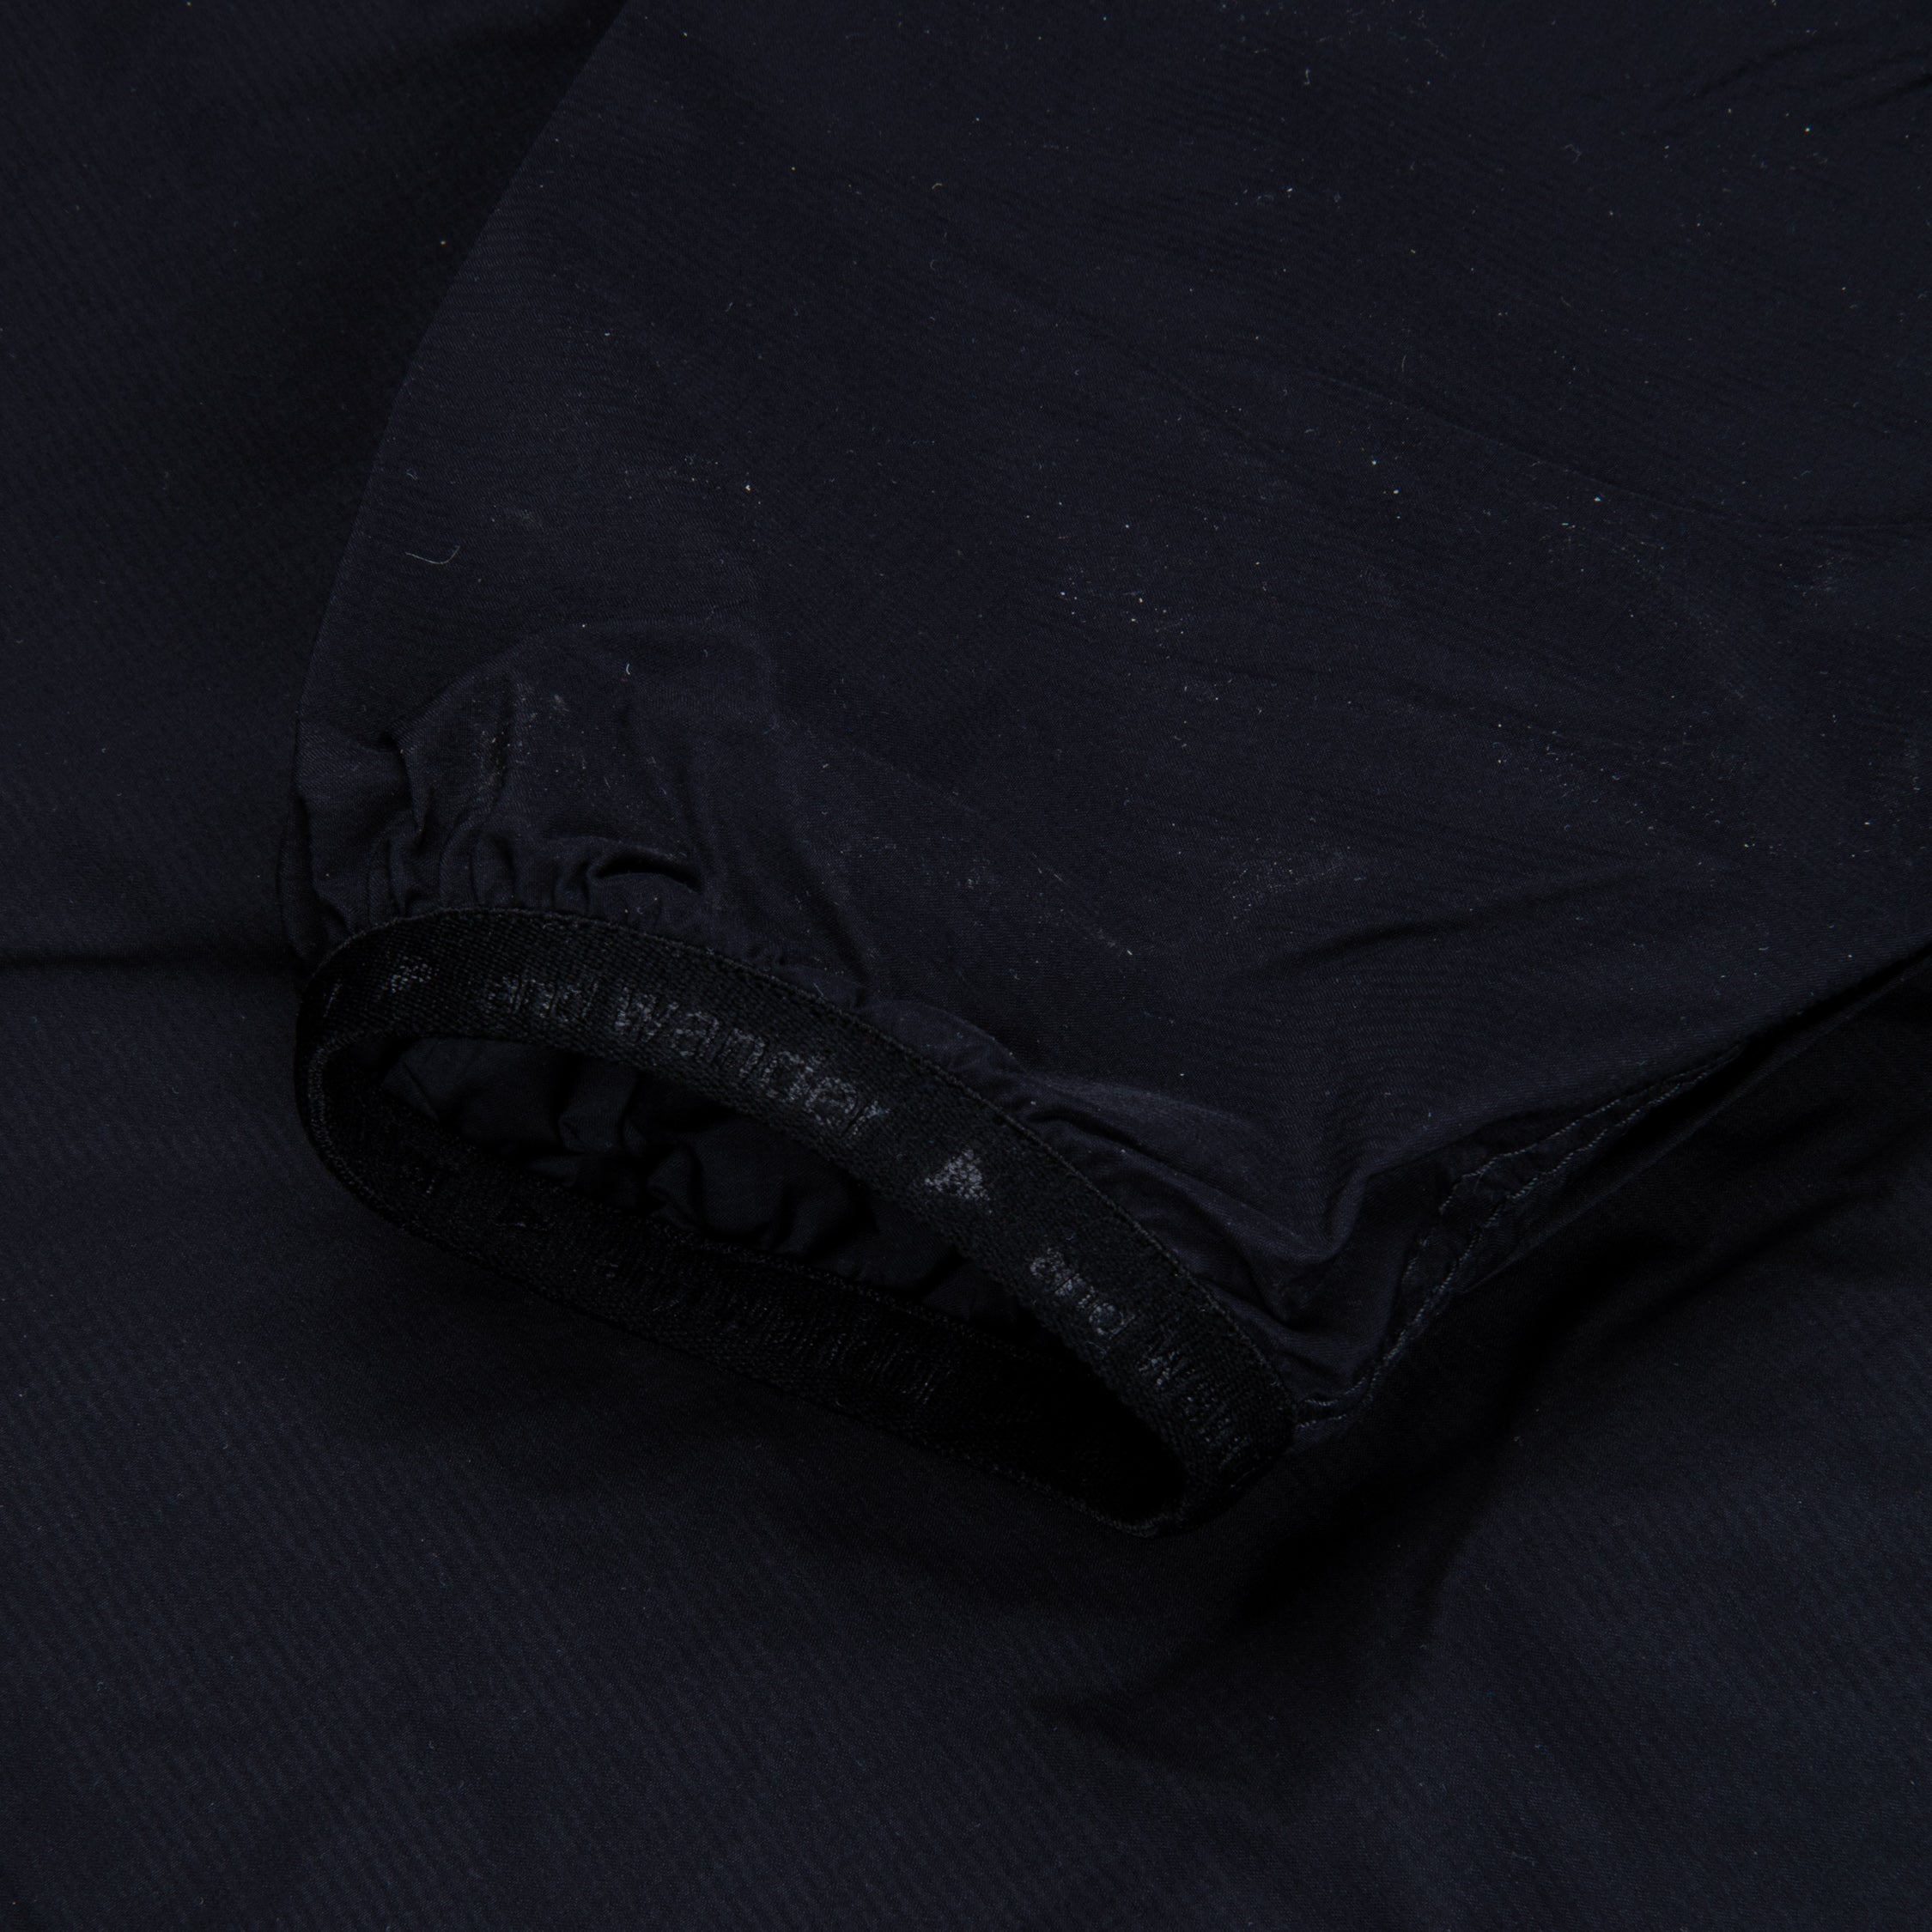 And Wander 3L UL Rain Jacket Black – Frans Boone Store